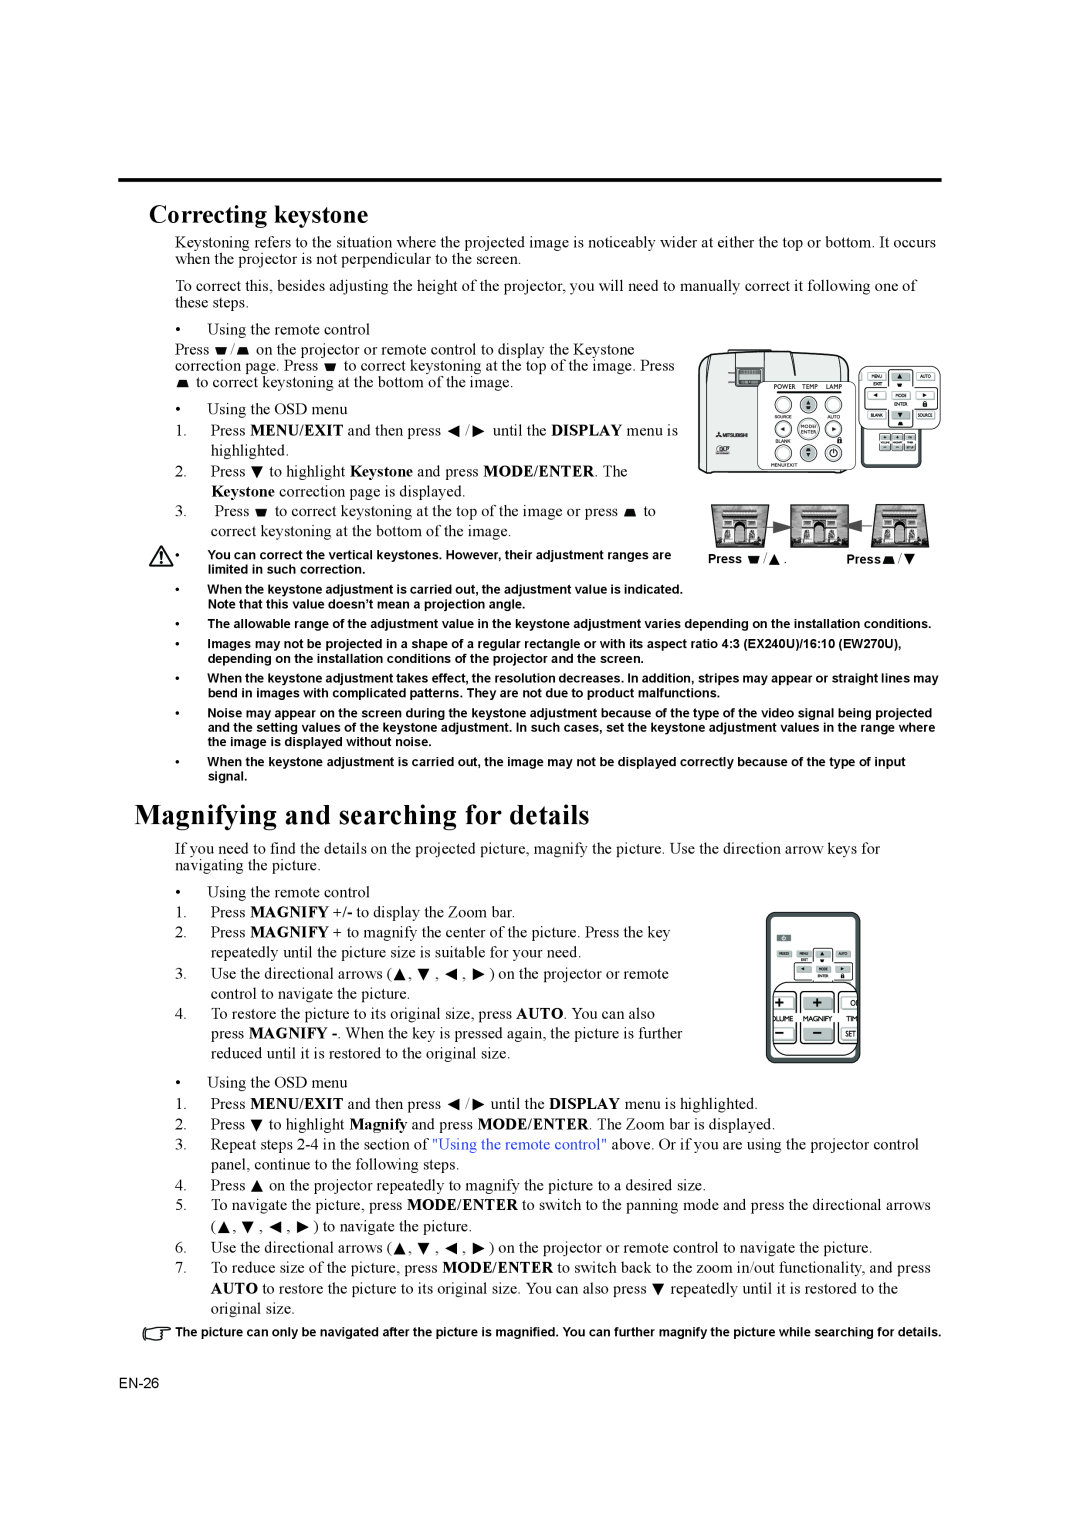 Mitsubishi Electronics EW270U user manual Magnifying and searching for details, Correcting keystone 